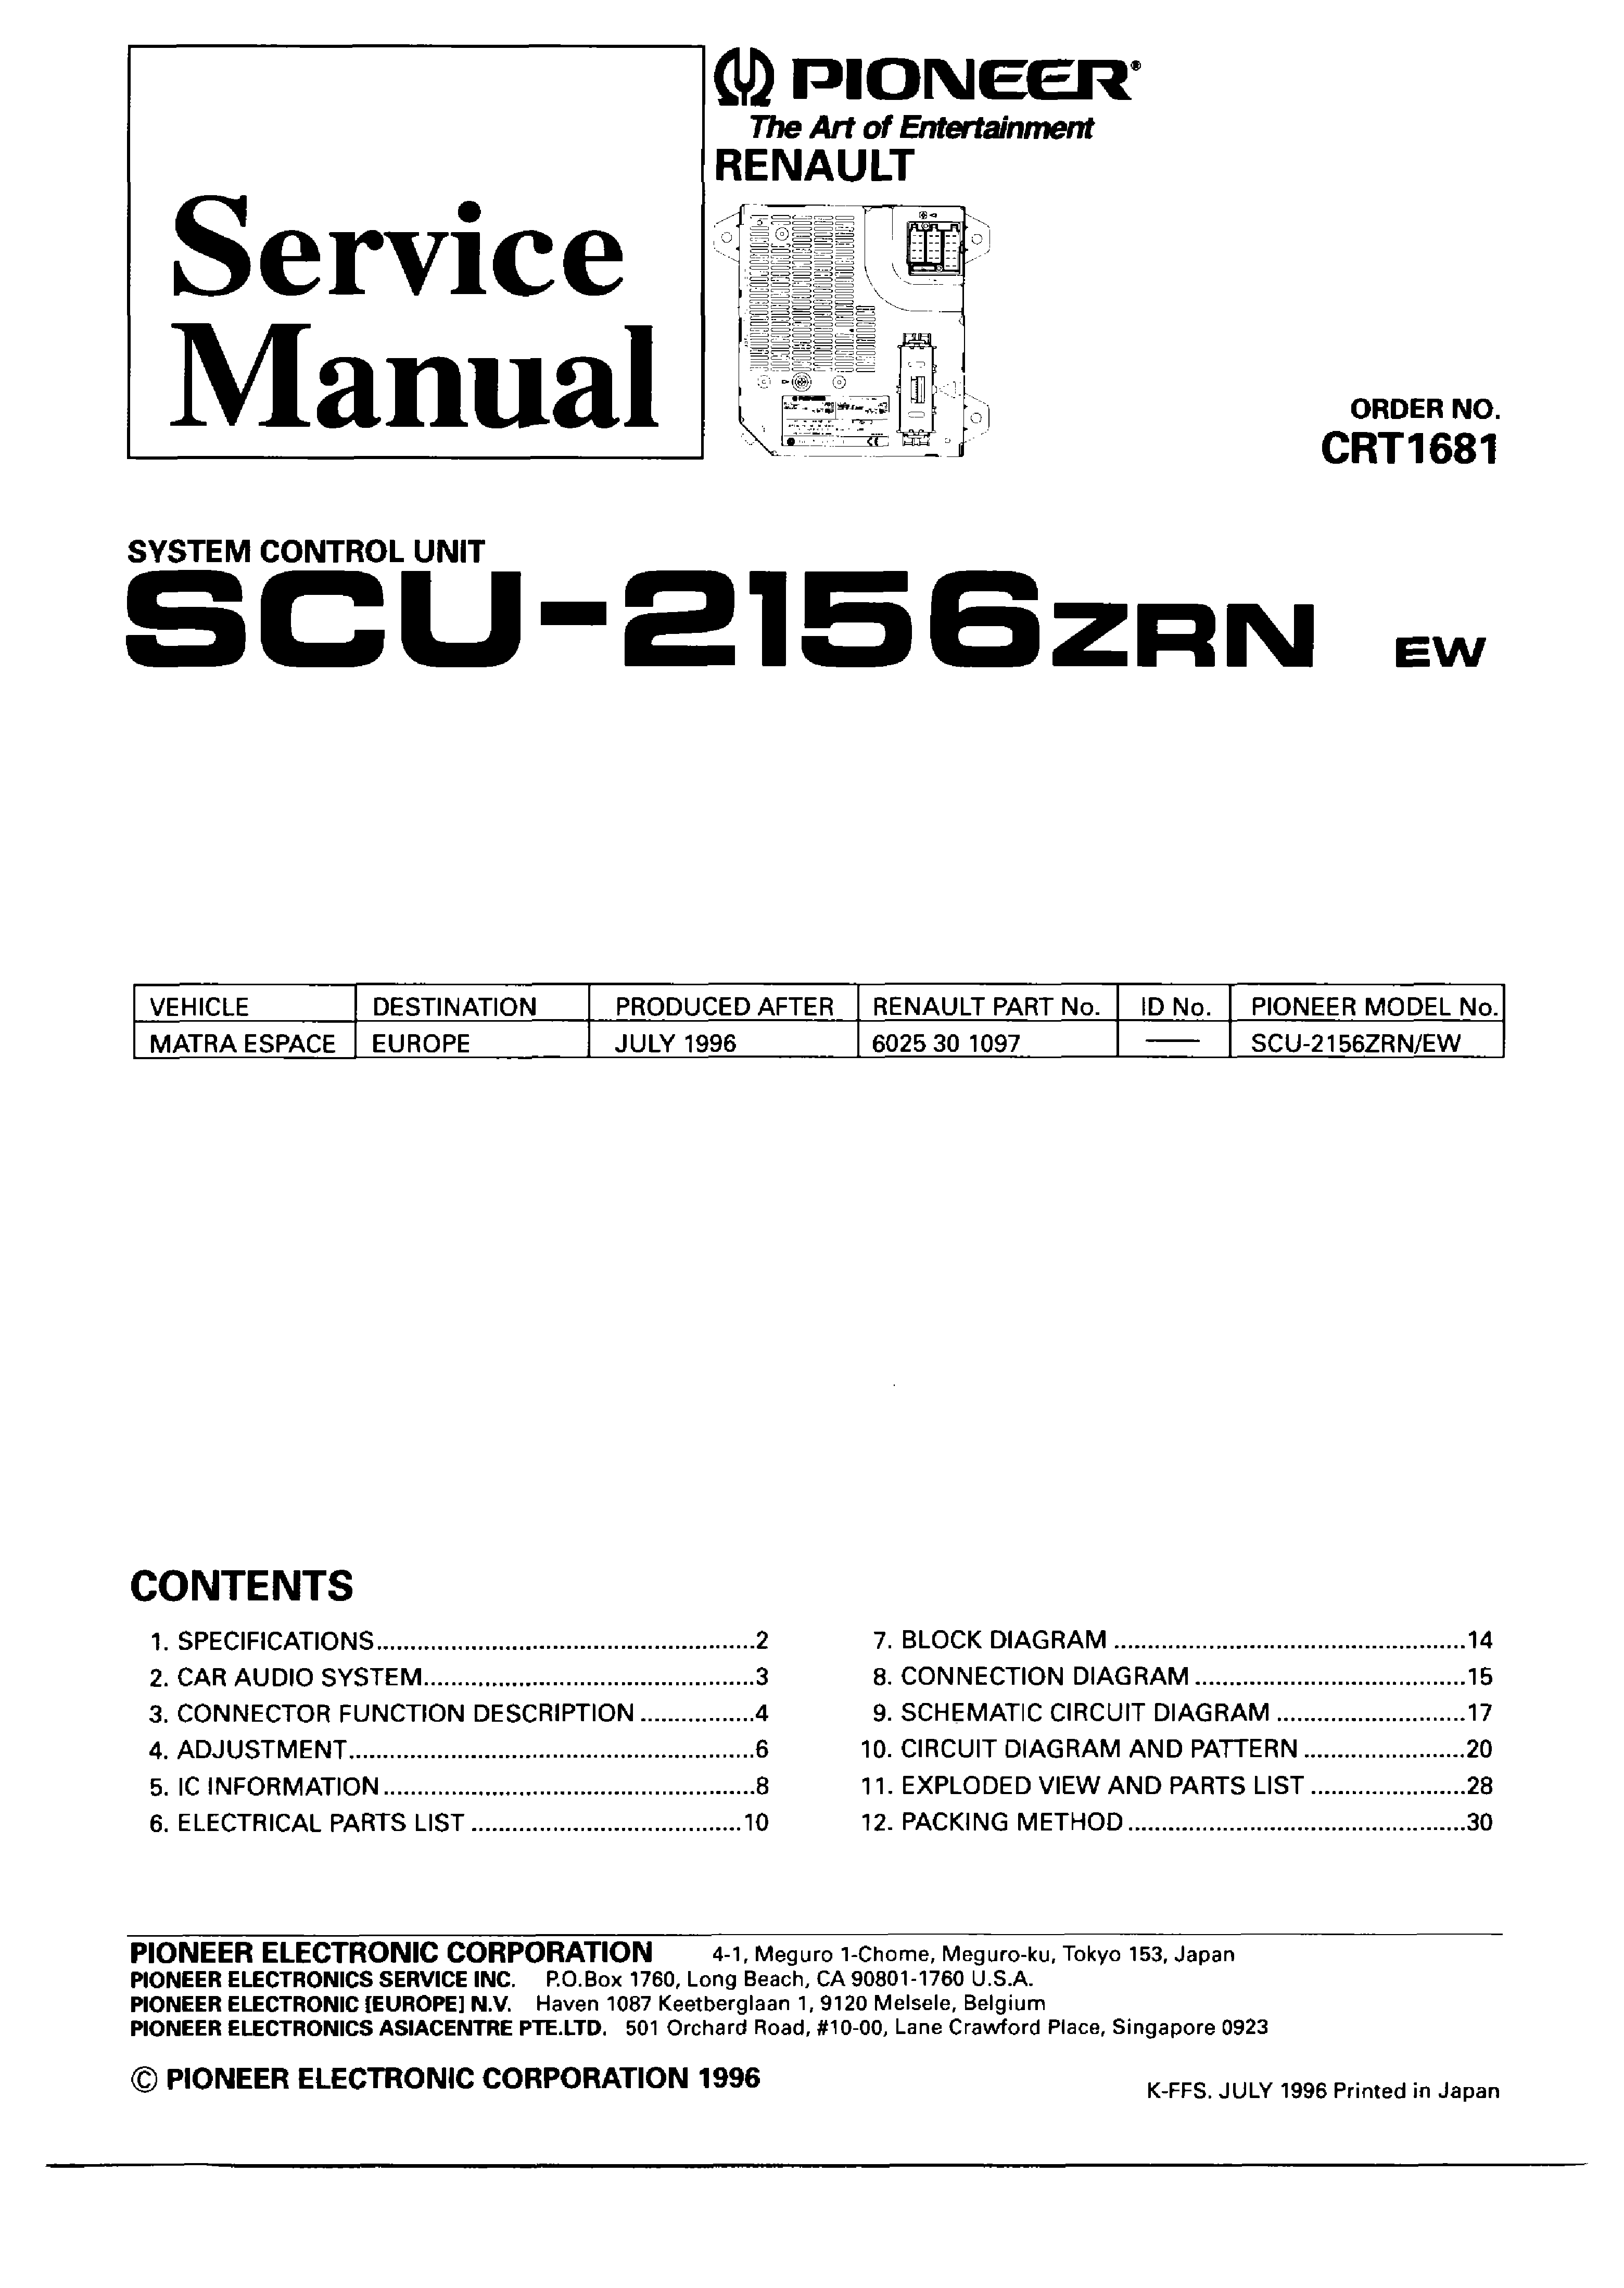 PIONEER SCU-2156 service manual (1st page)